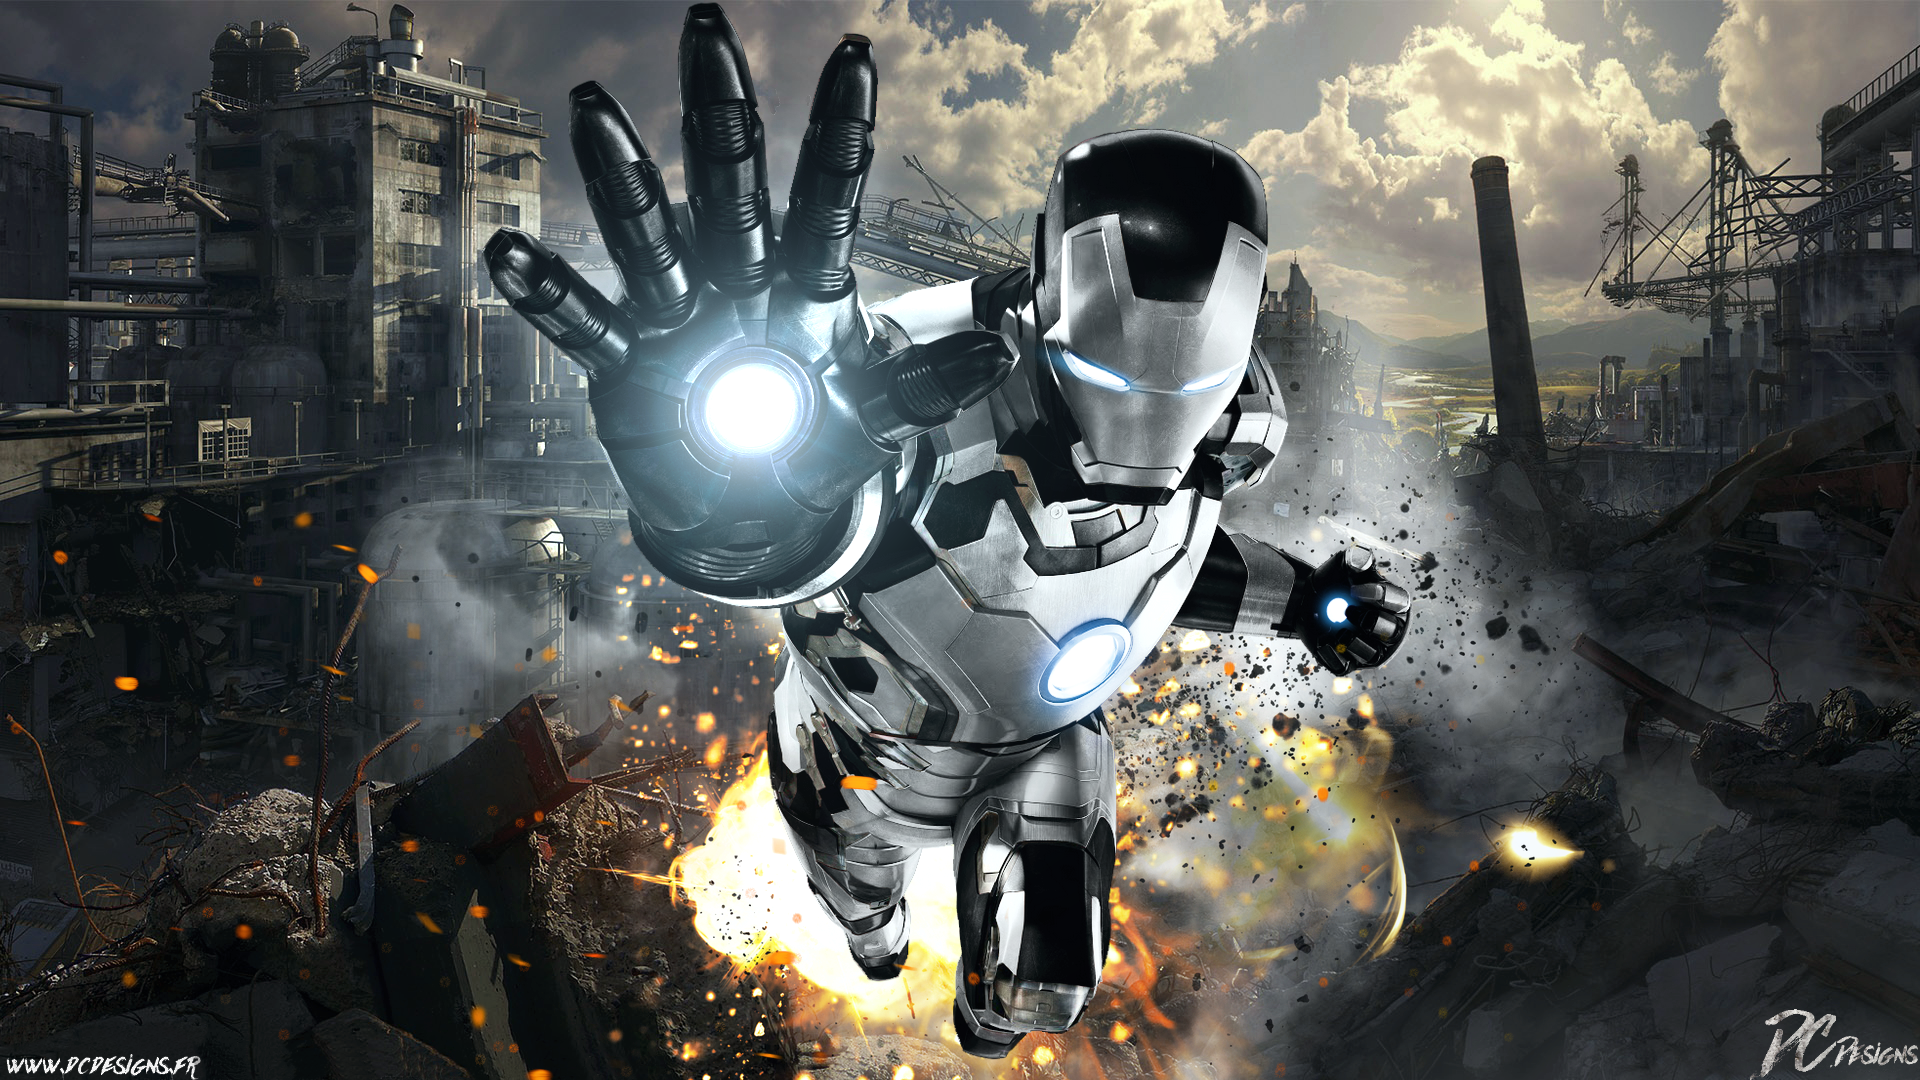 Movie Iron Man HD Wallpaper | Background Image